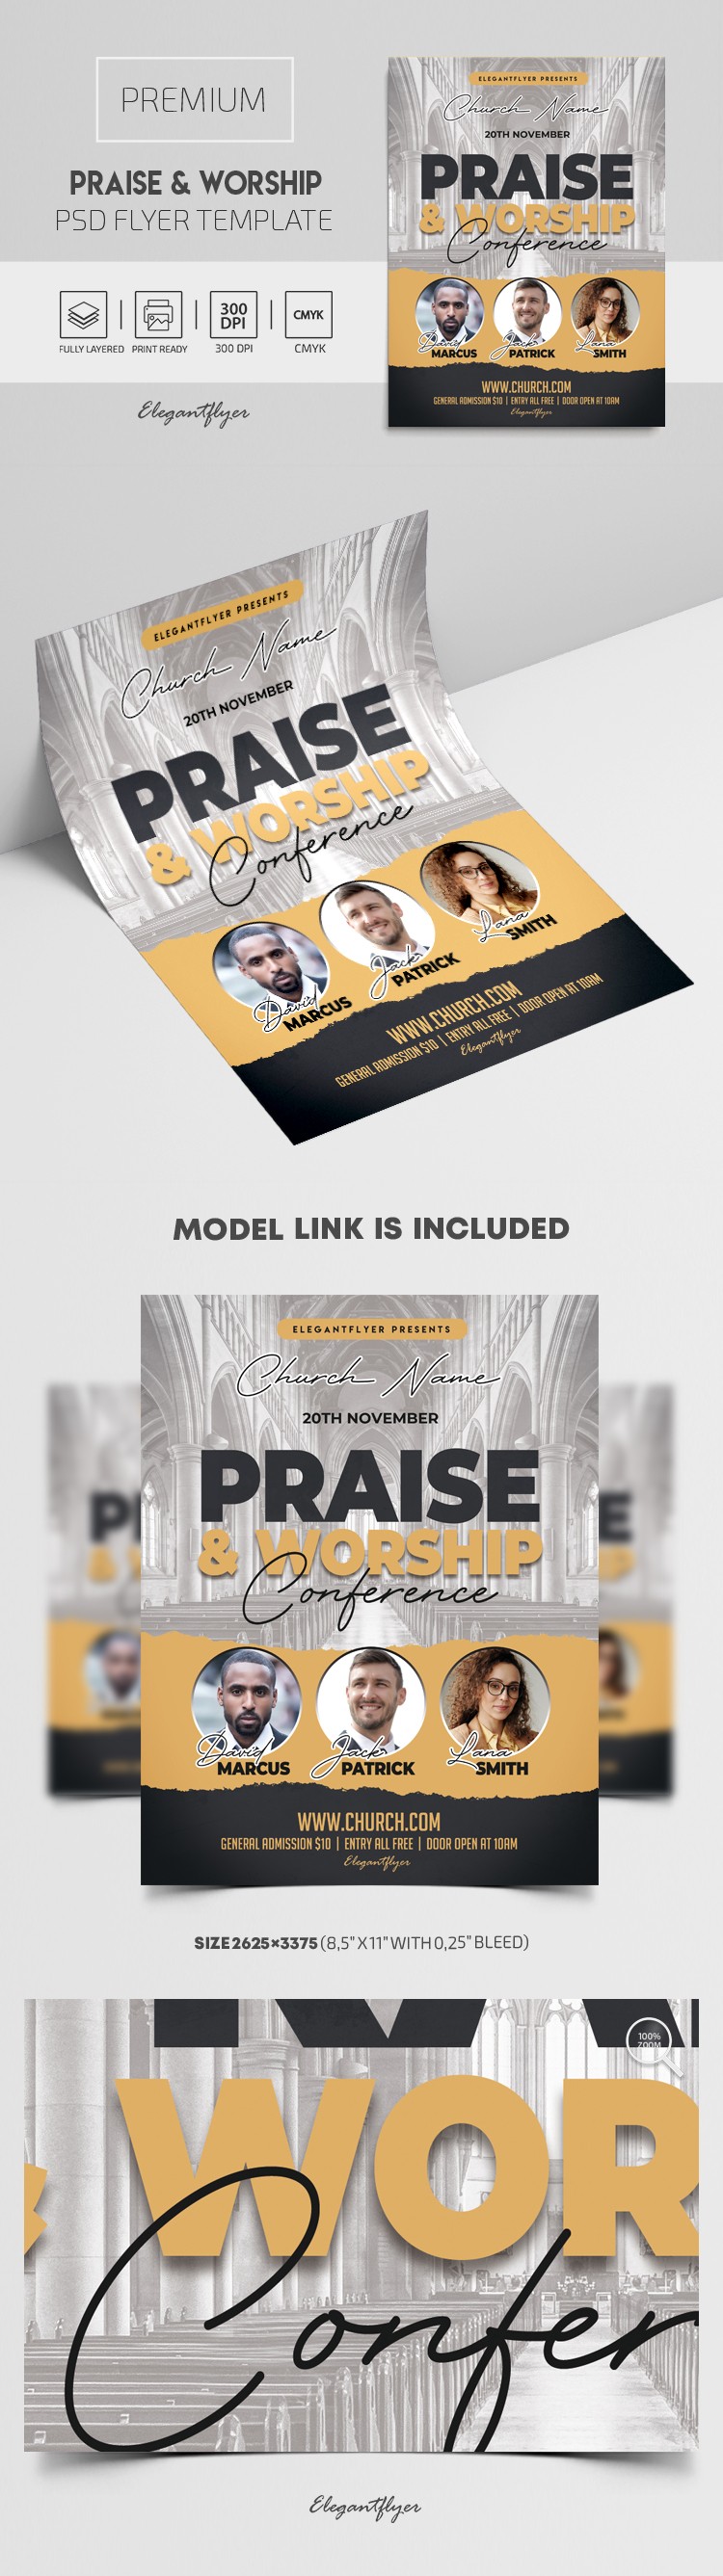 Praise and Worship Flyer by ElegantFlyer